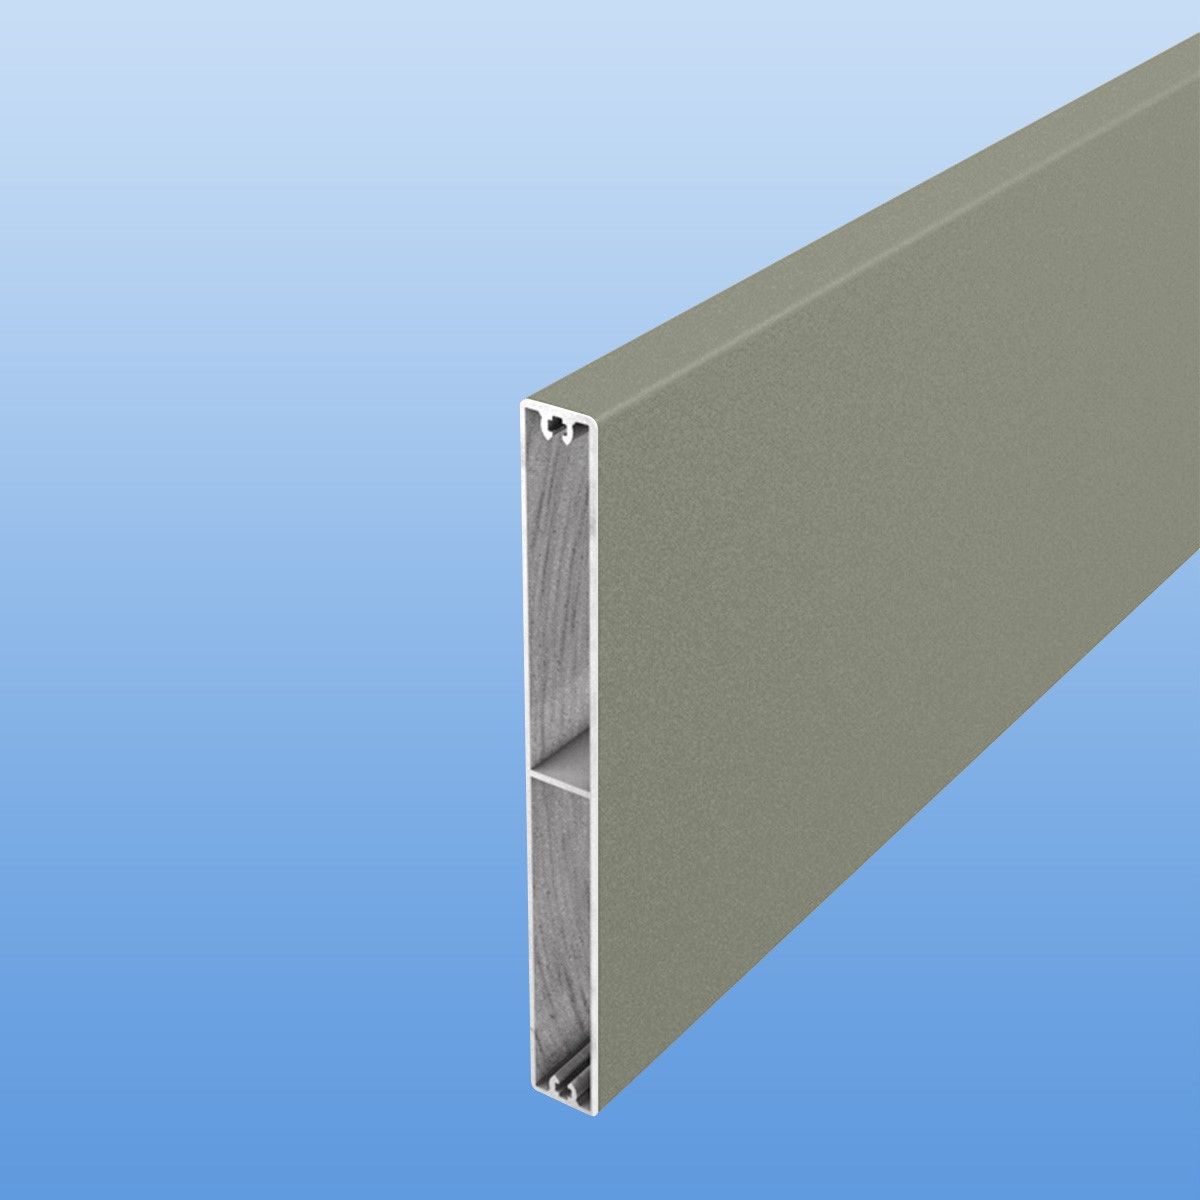 Zaunplanke aus Aluminium 150 mm breit in Grau (RAL 7030)